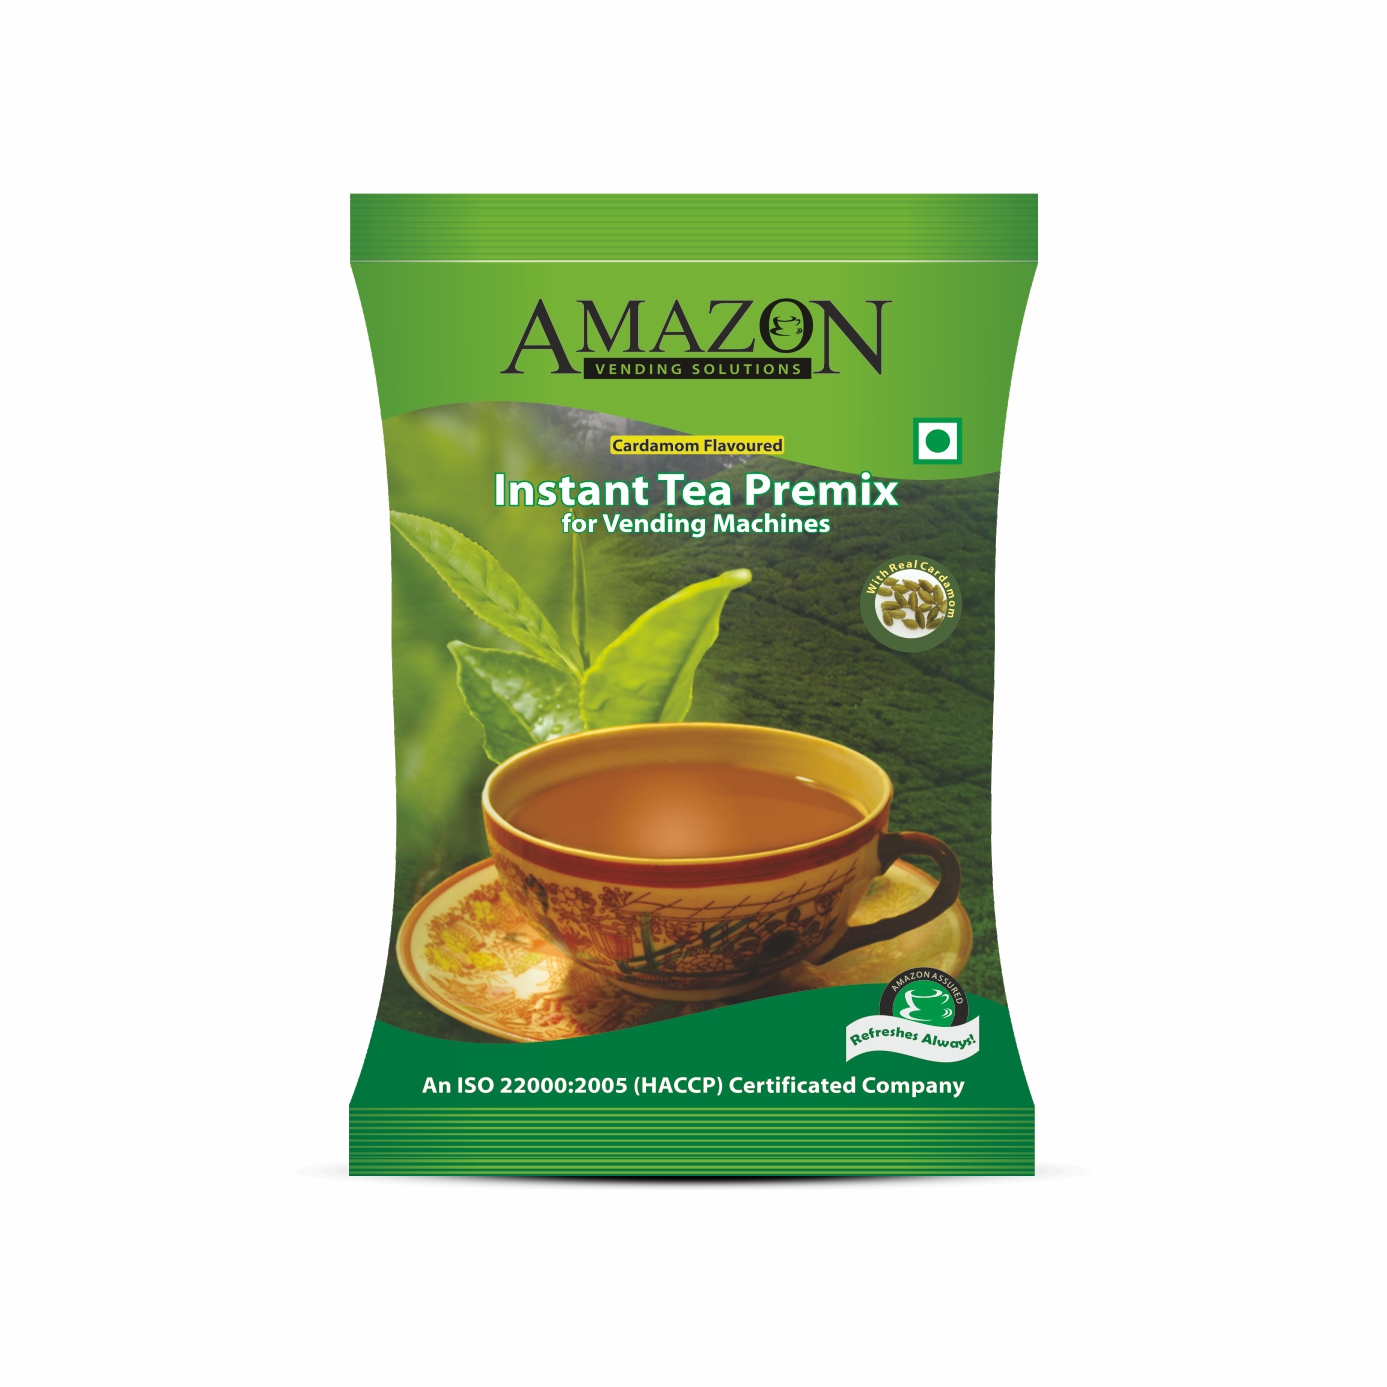 Amazon 3 in 1 Instant Cardamom Tea Premix